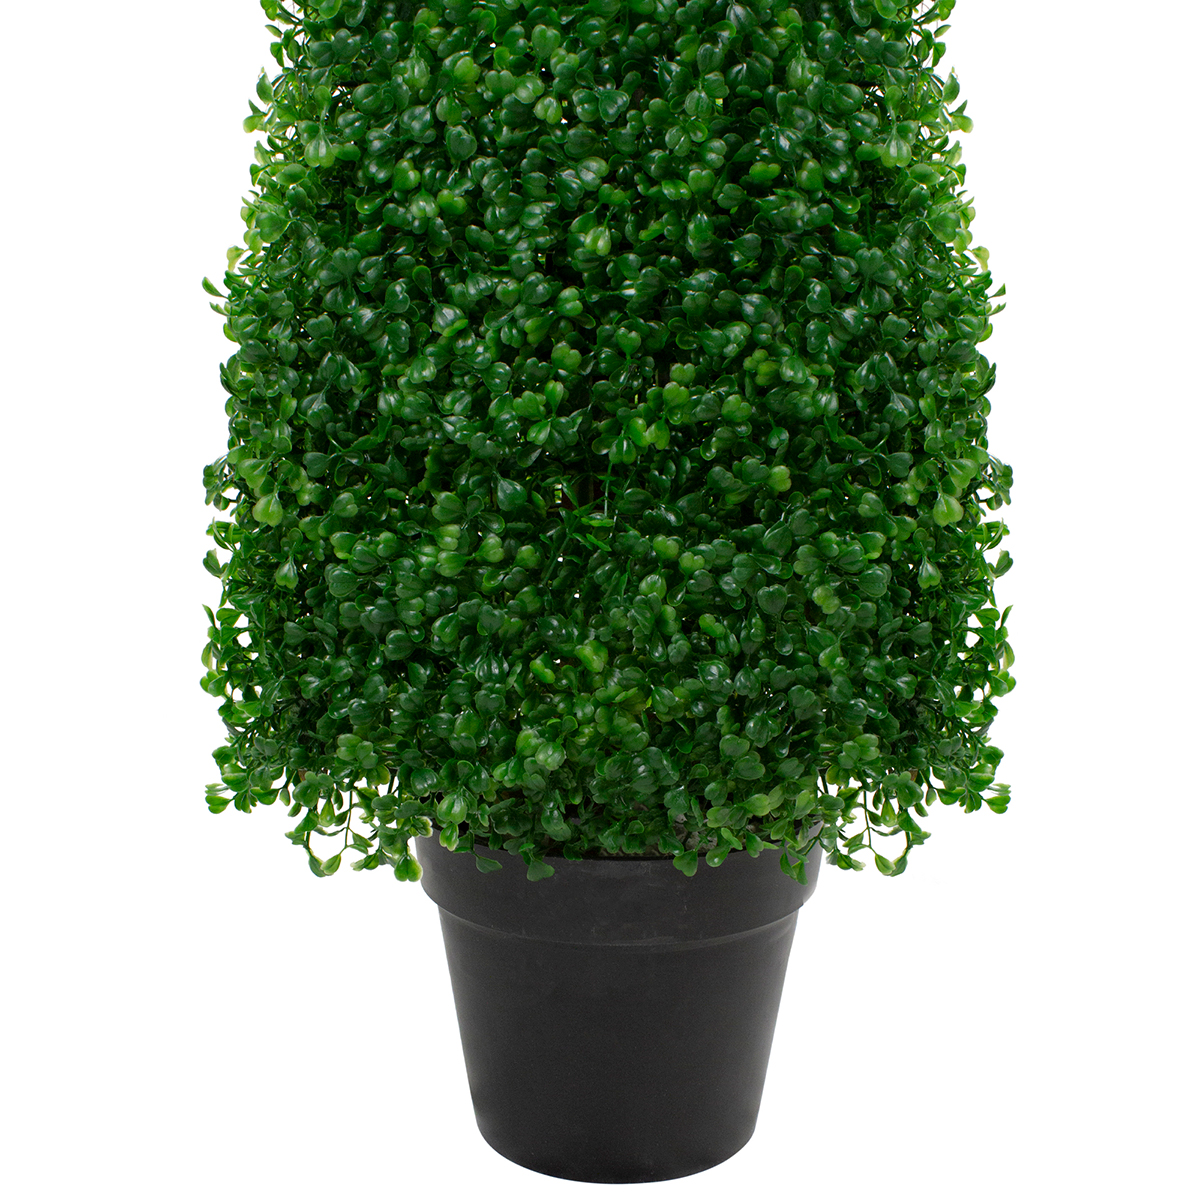 Northlight Seasonal 45in. Unlit Artificial Boxwood Topiary Tree